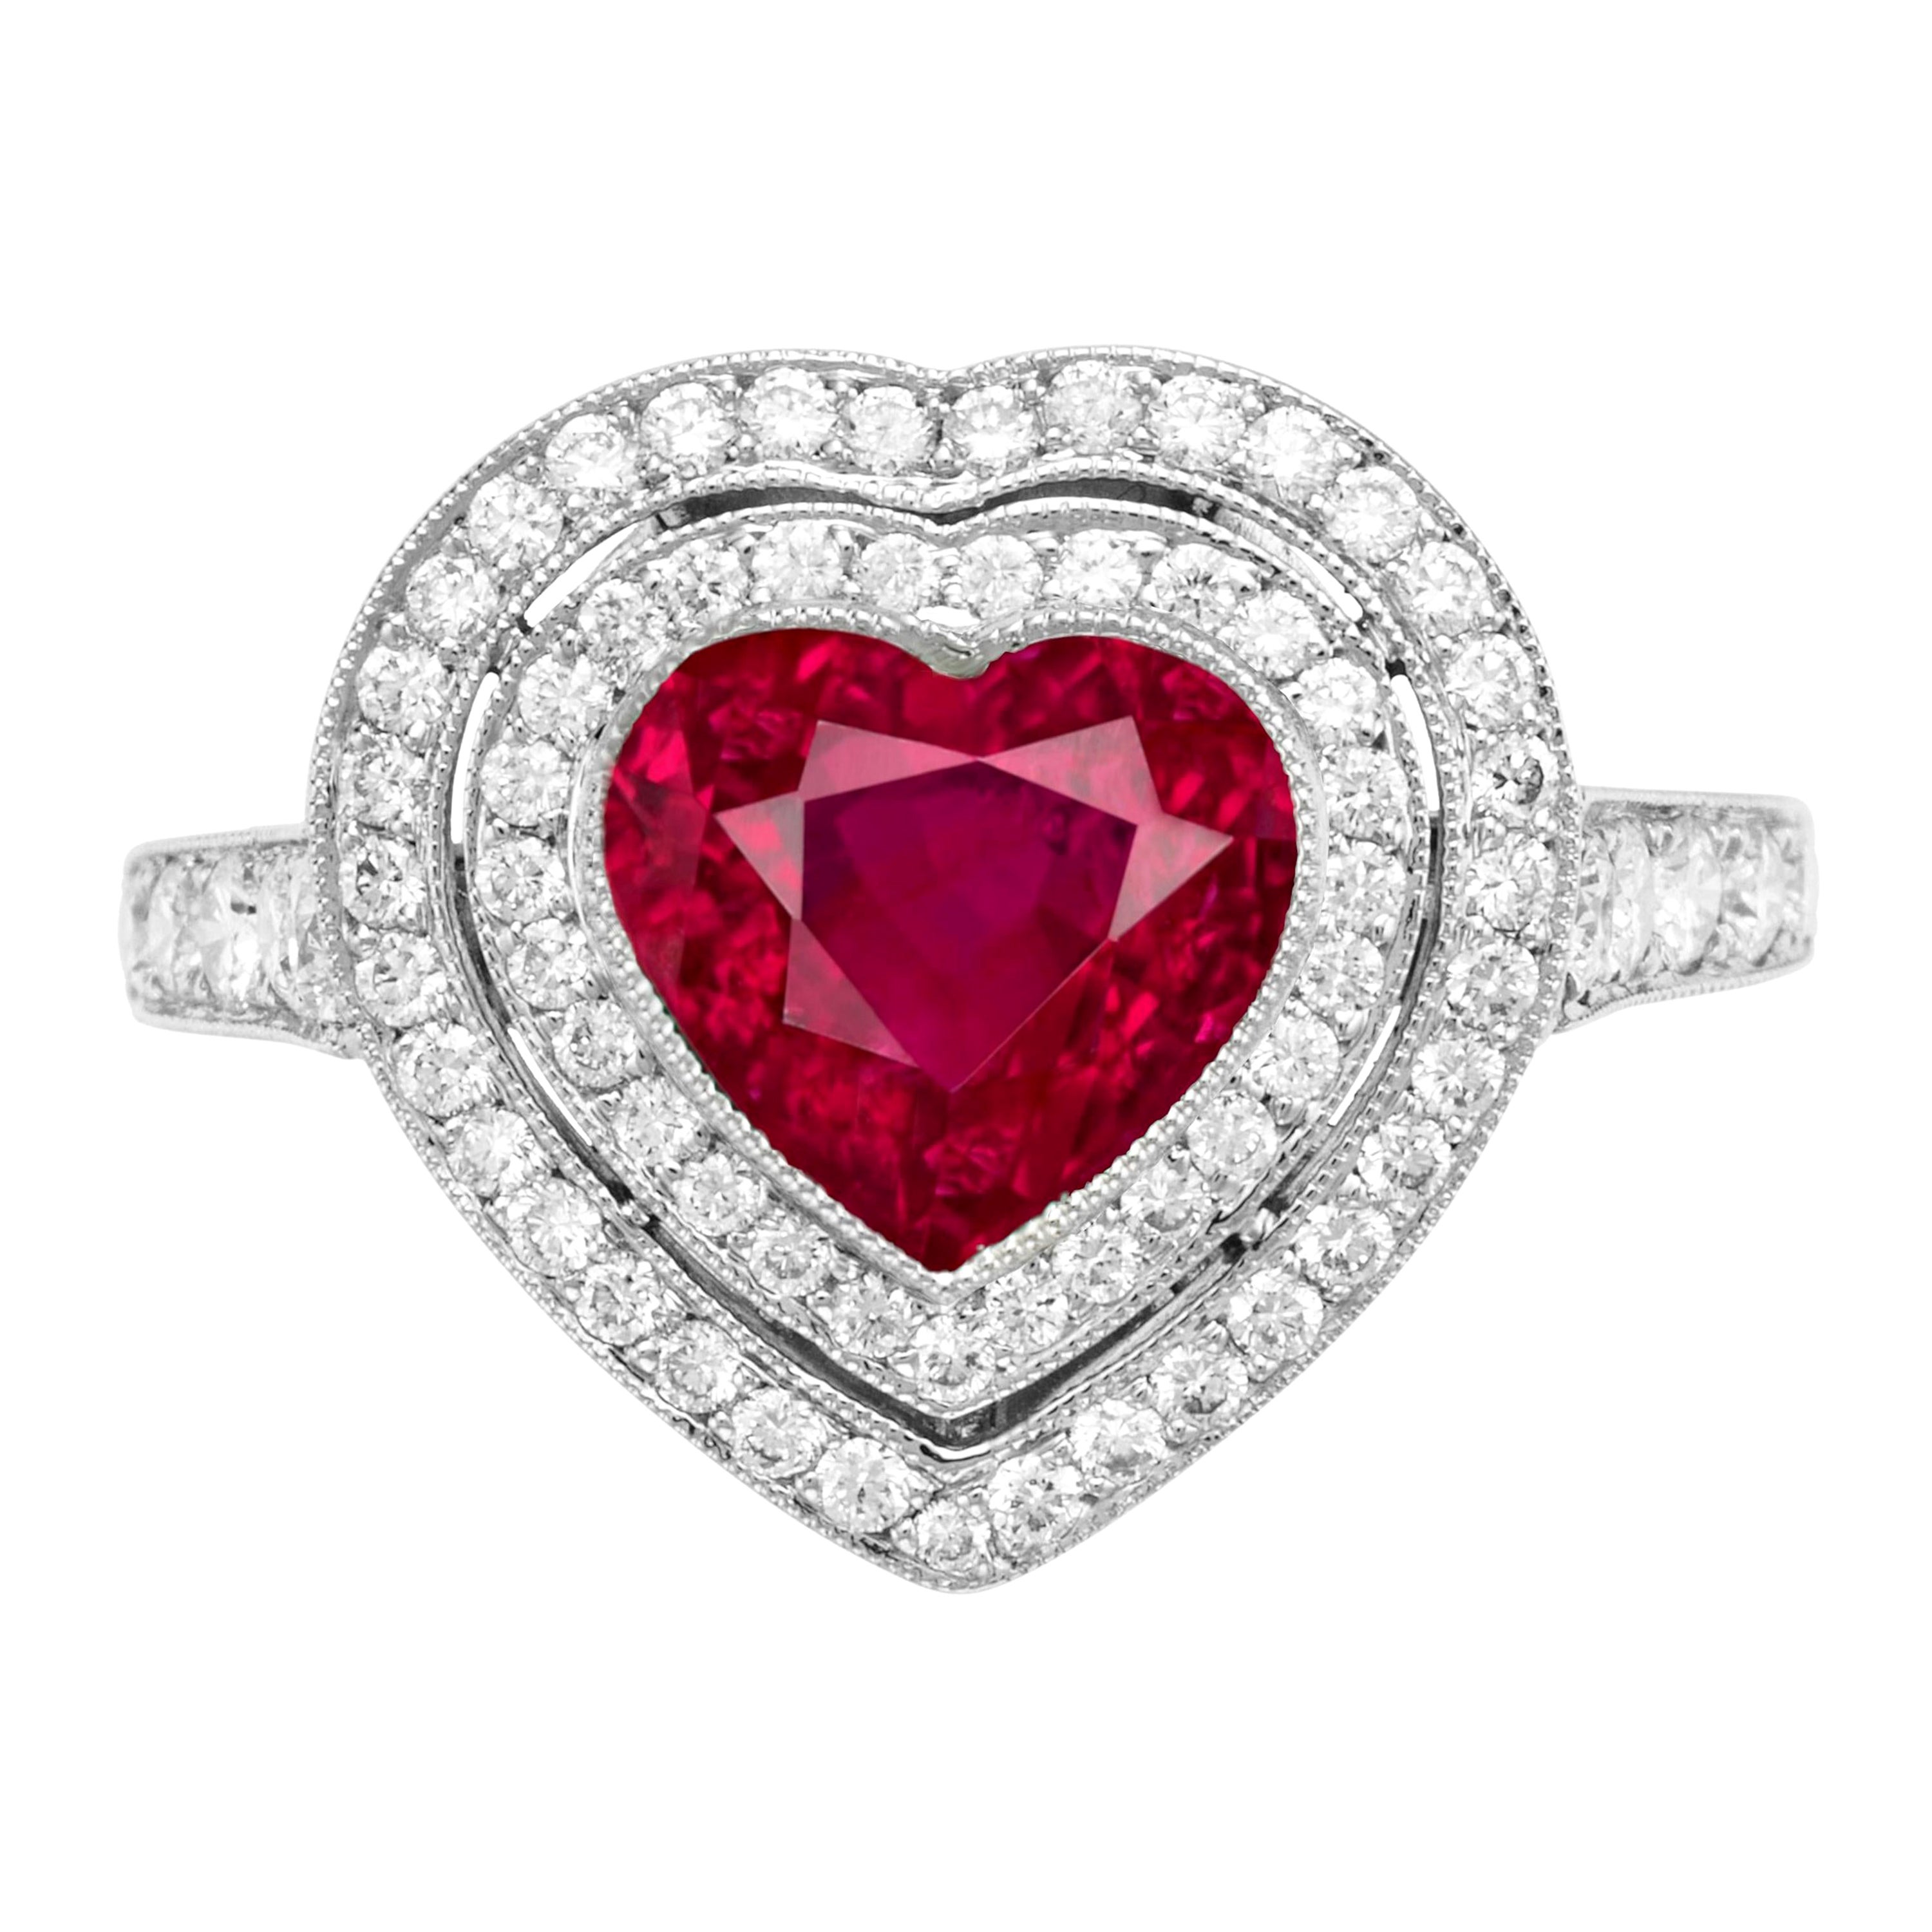 GIA GRS Certified 3 Carat Heart Shape Vivid Red Ruby Diamond Ring